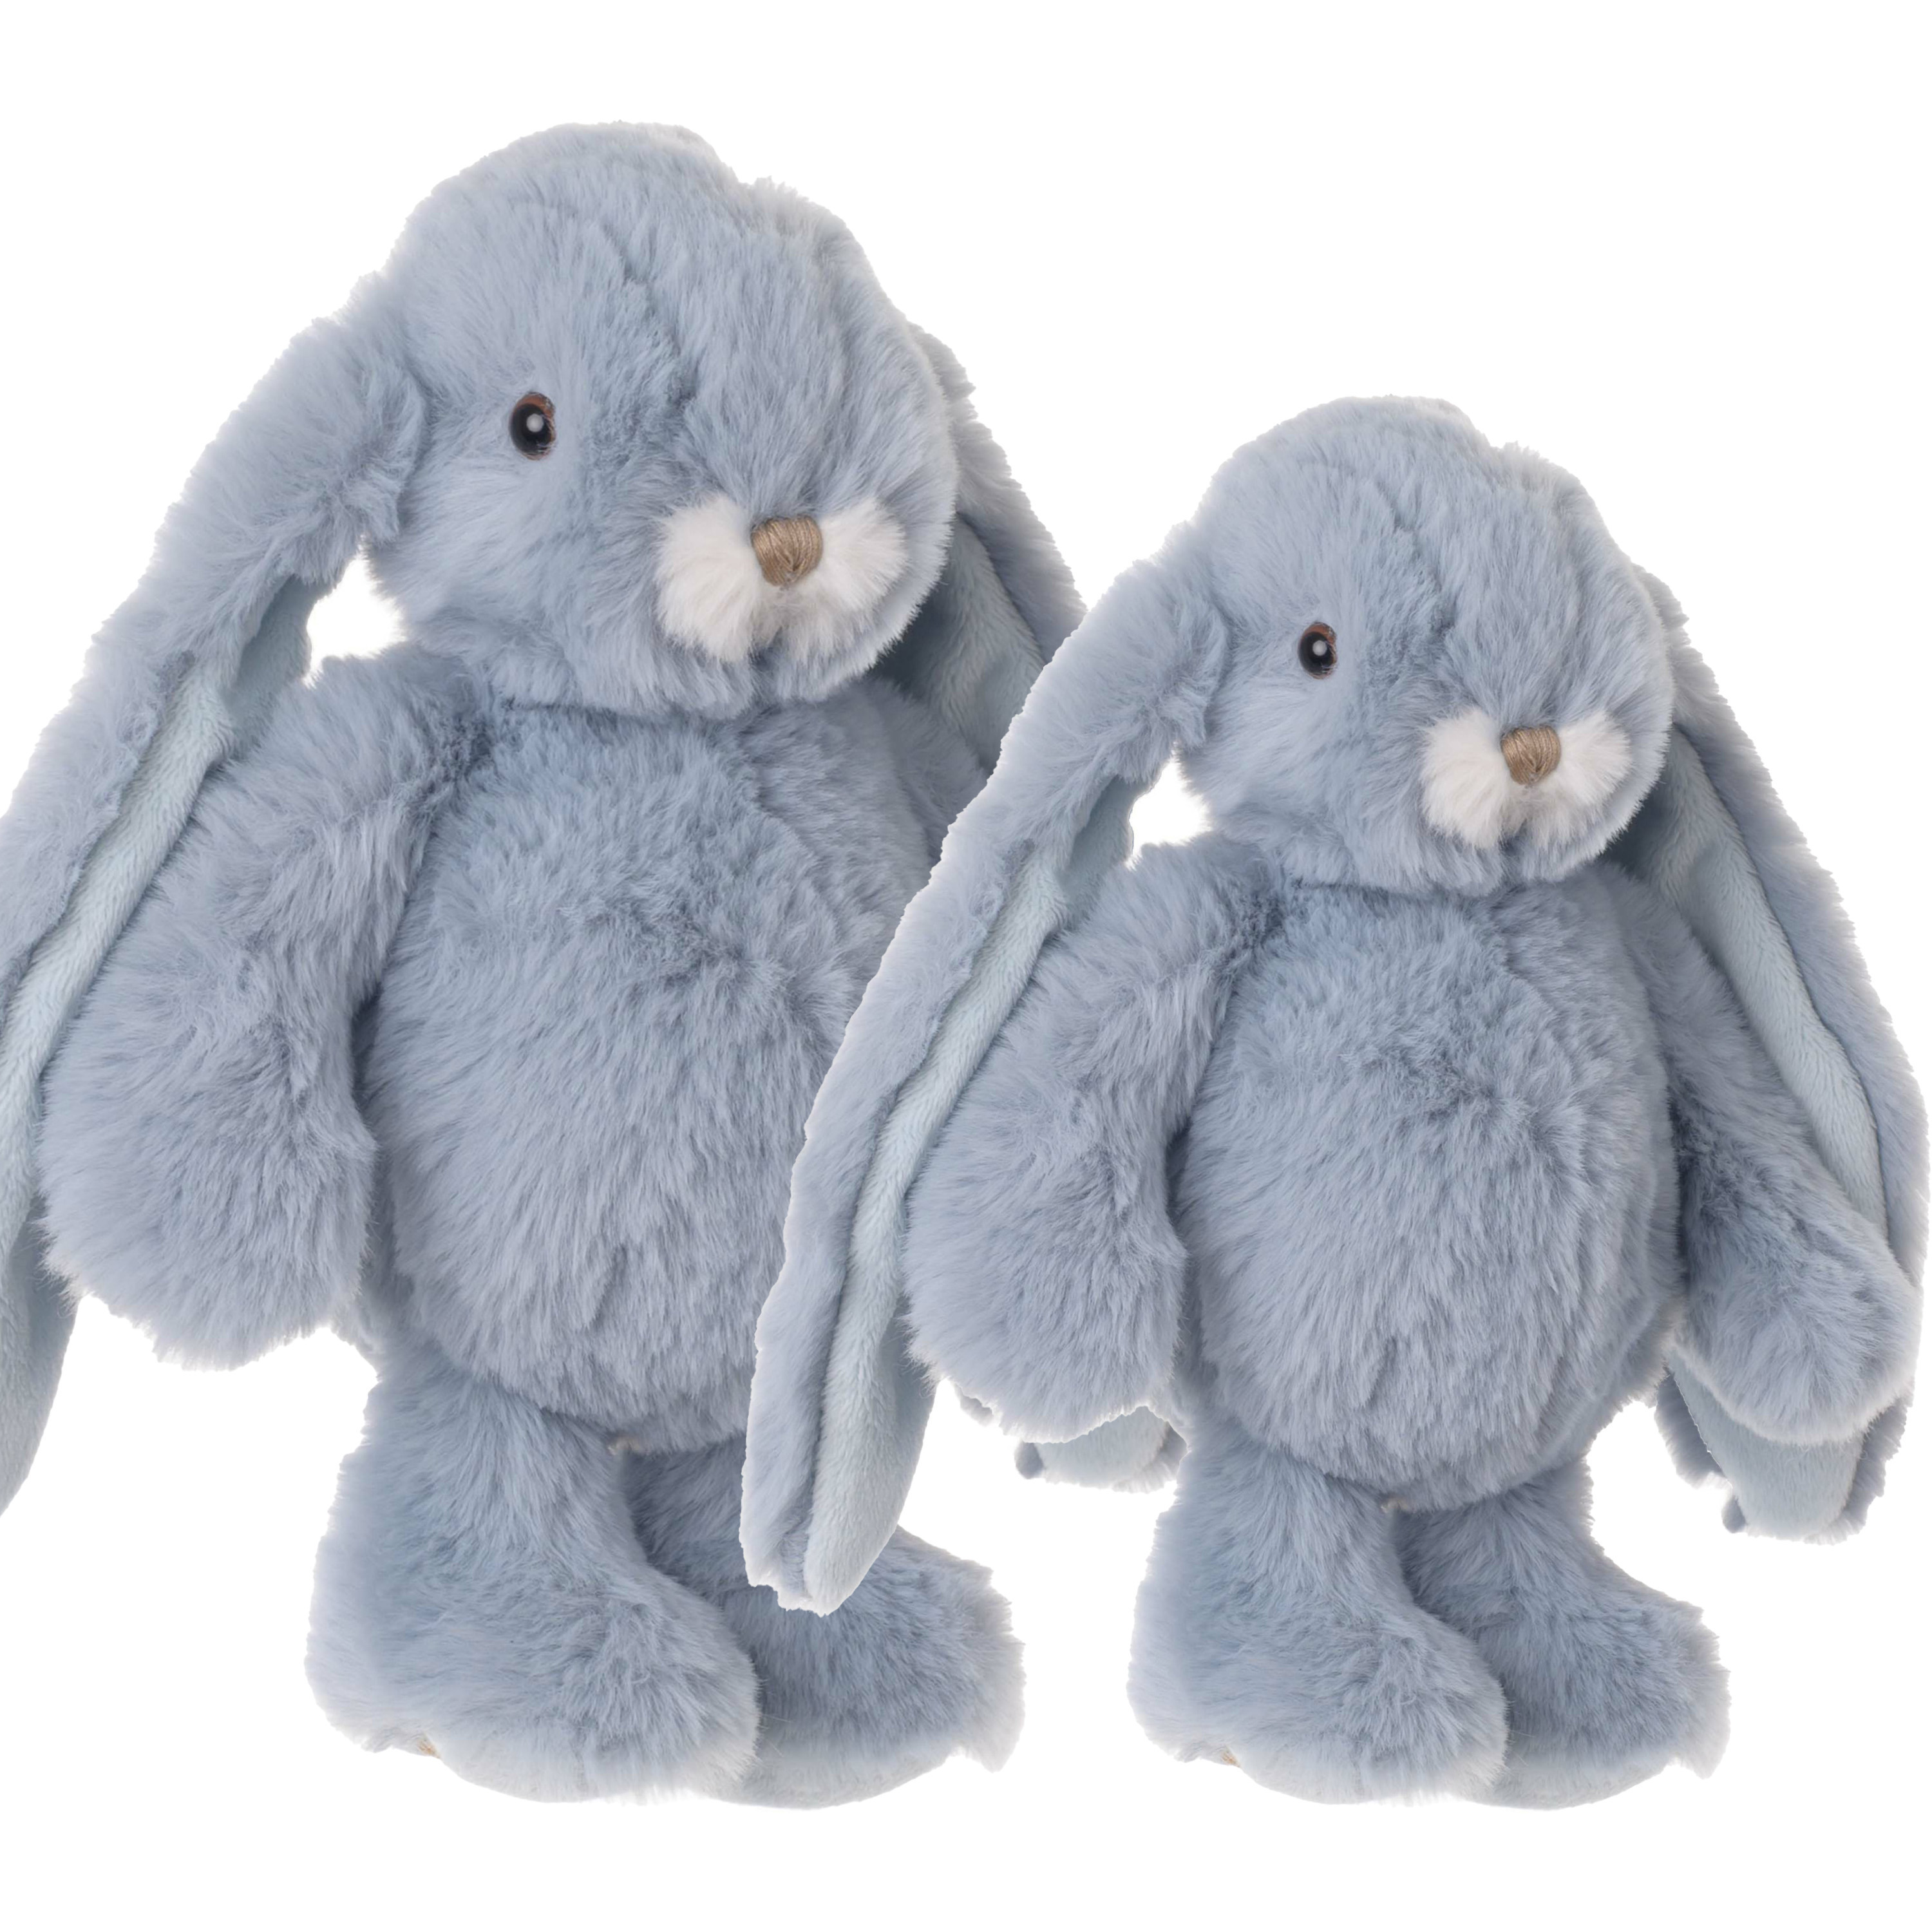 Bukowski pluche knuffel konijnen set 2x stuks lichtblauw 22 en 30 cm luxe knuffels